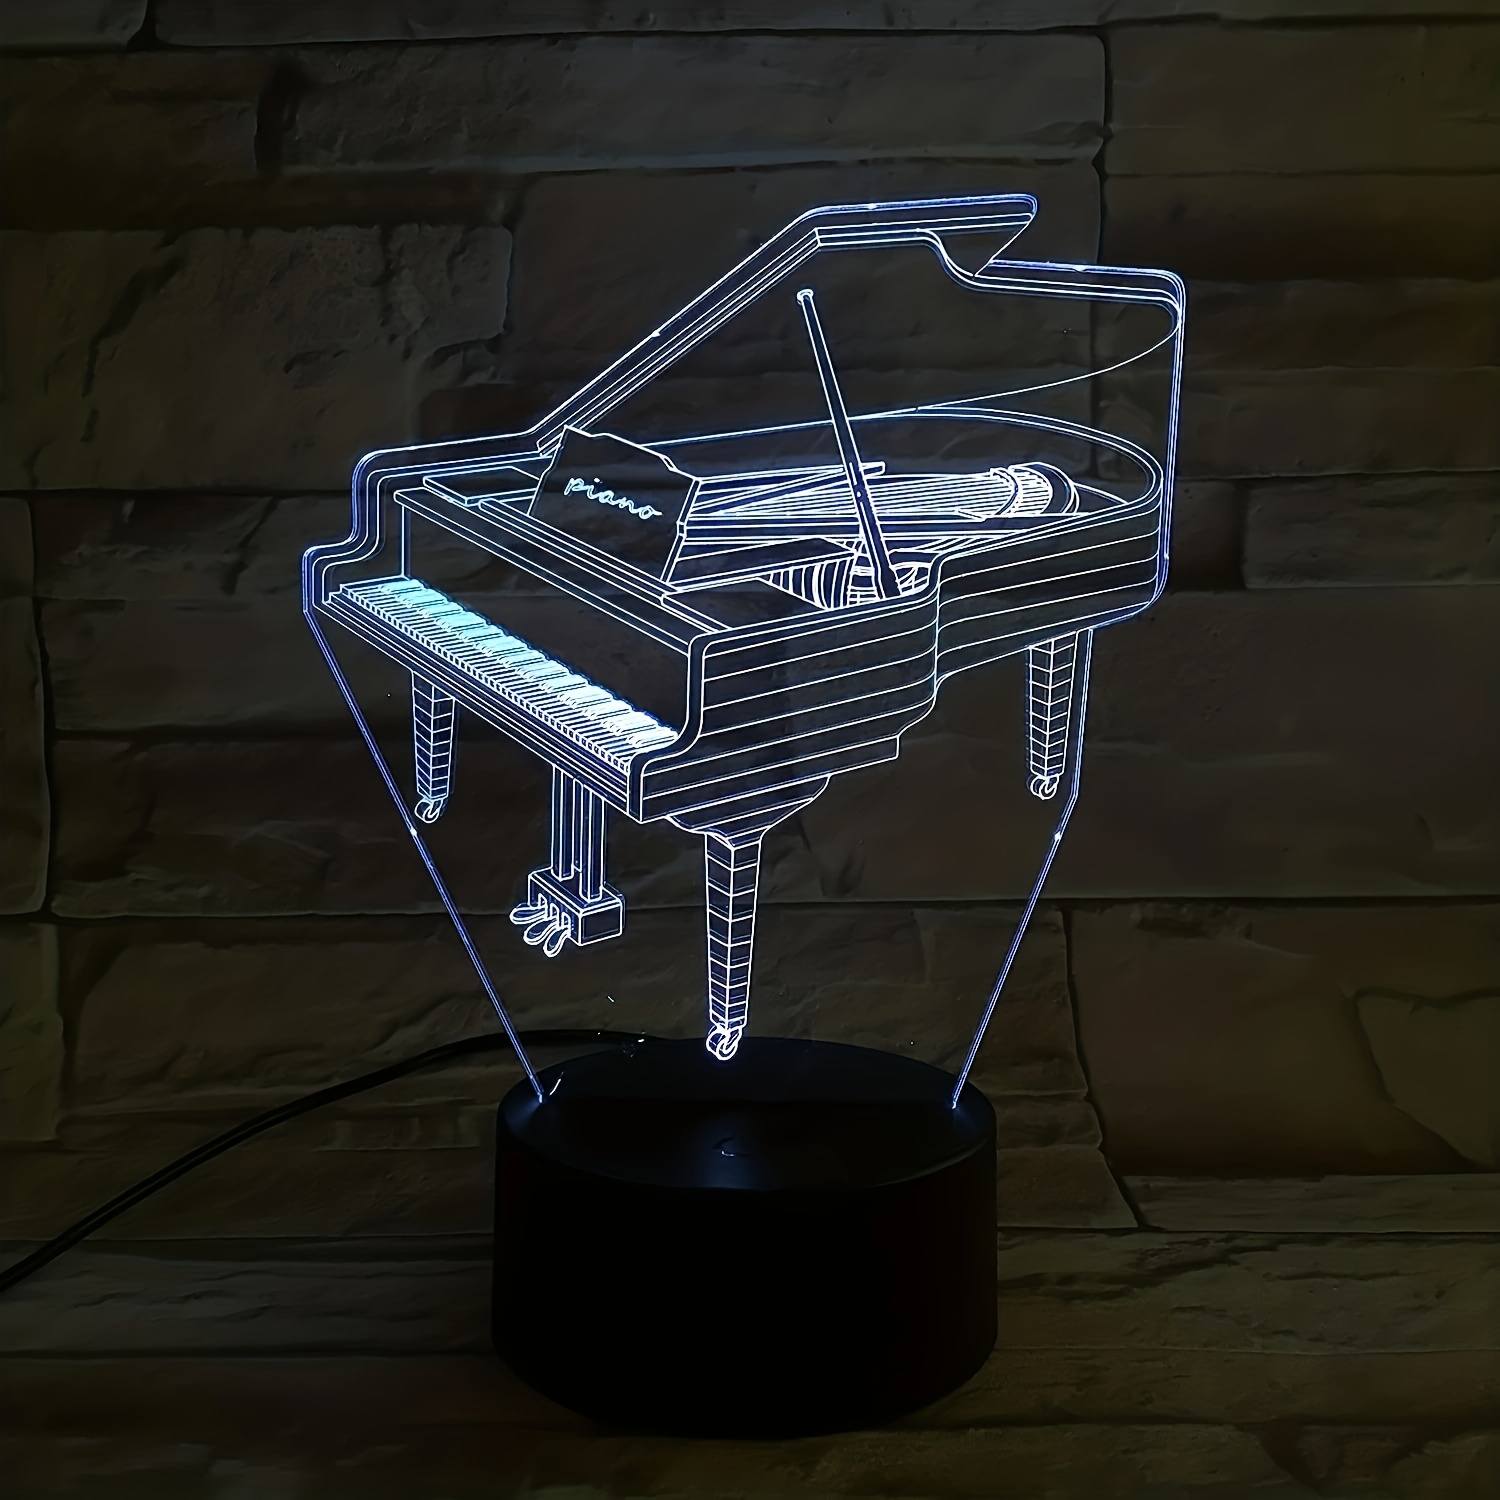 LAMPE POUR PIANO : UTILE OU PAS ? 